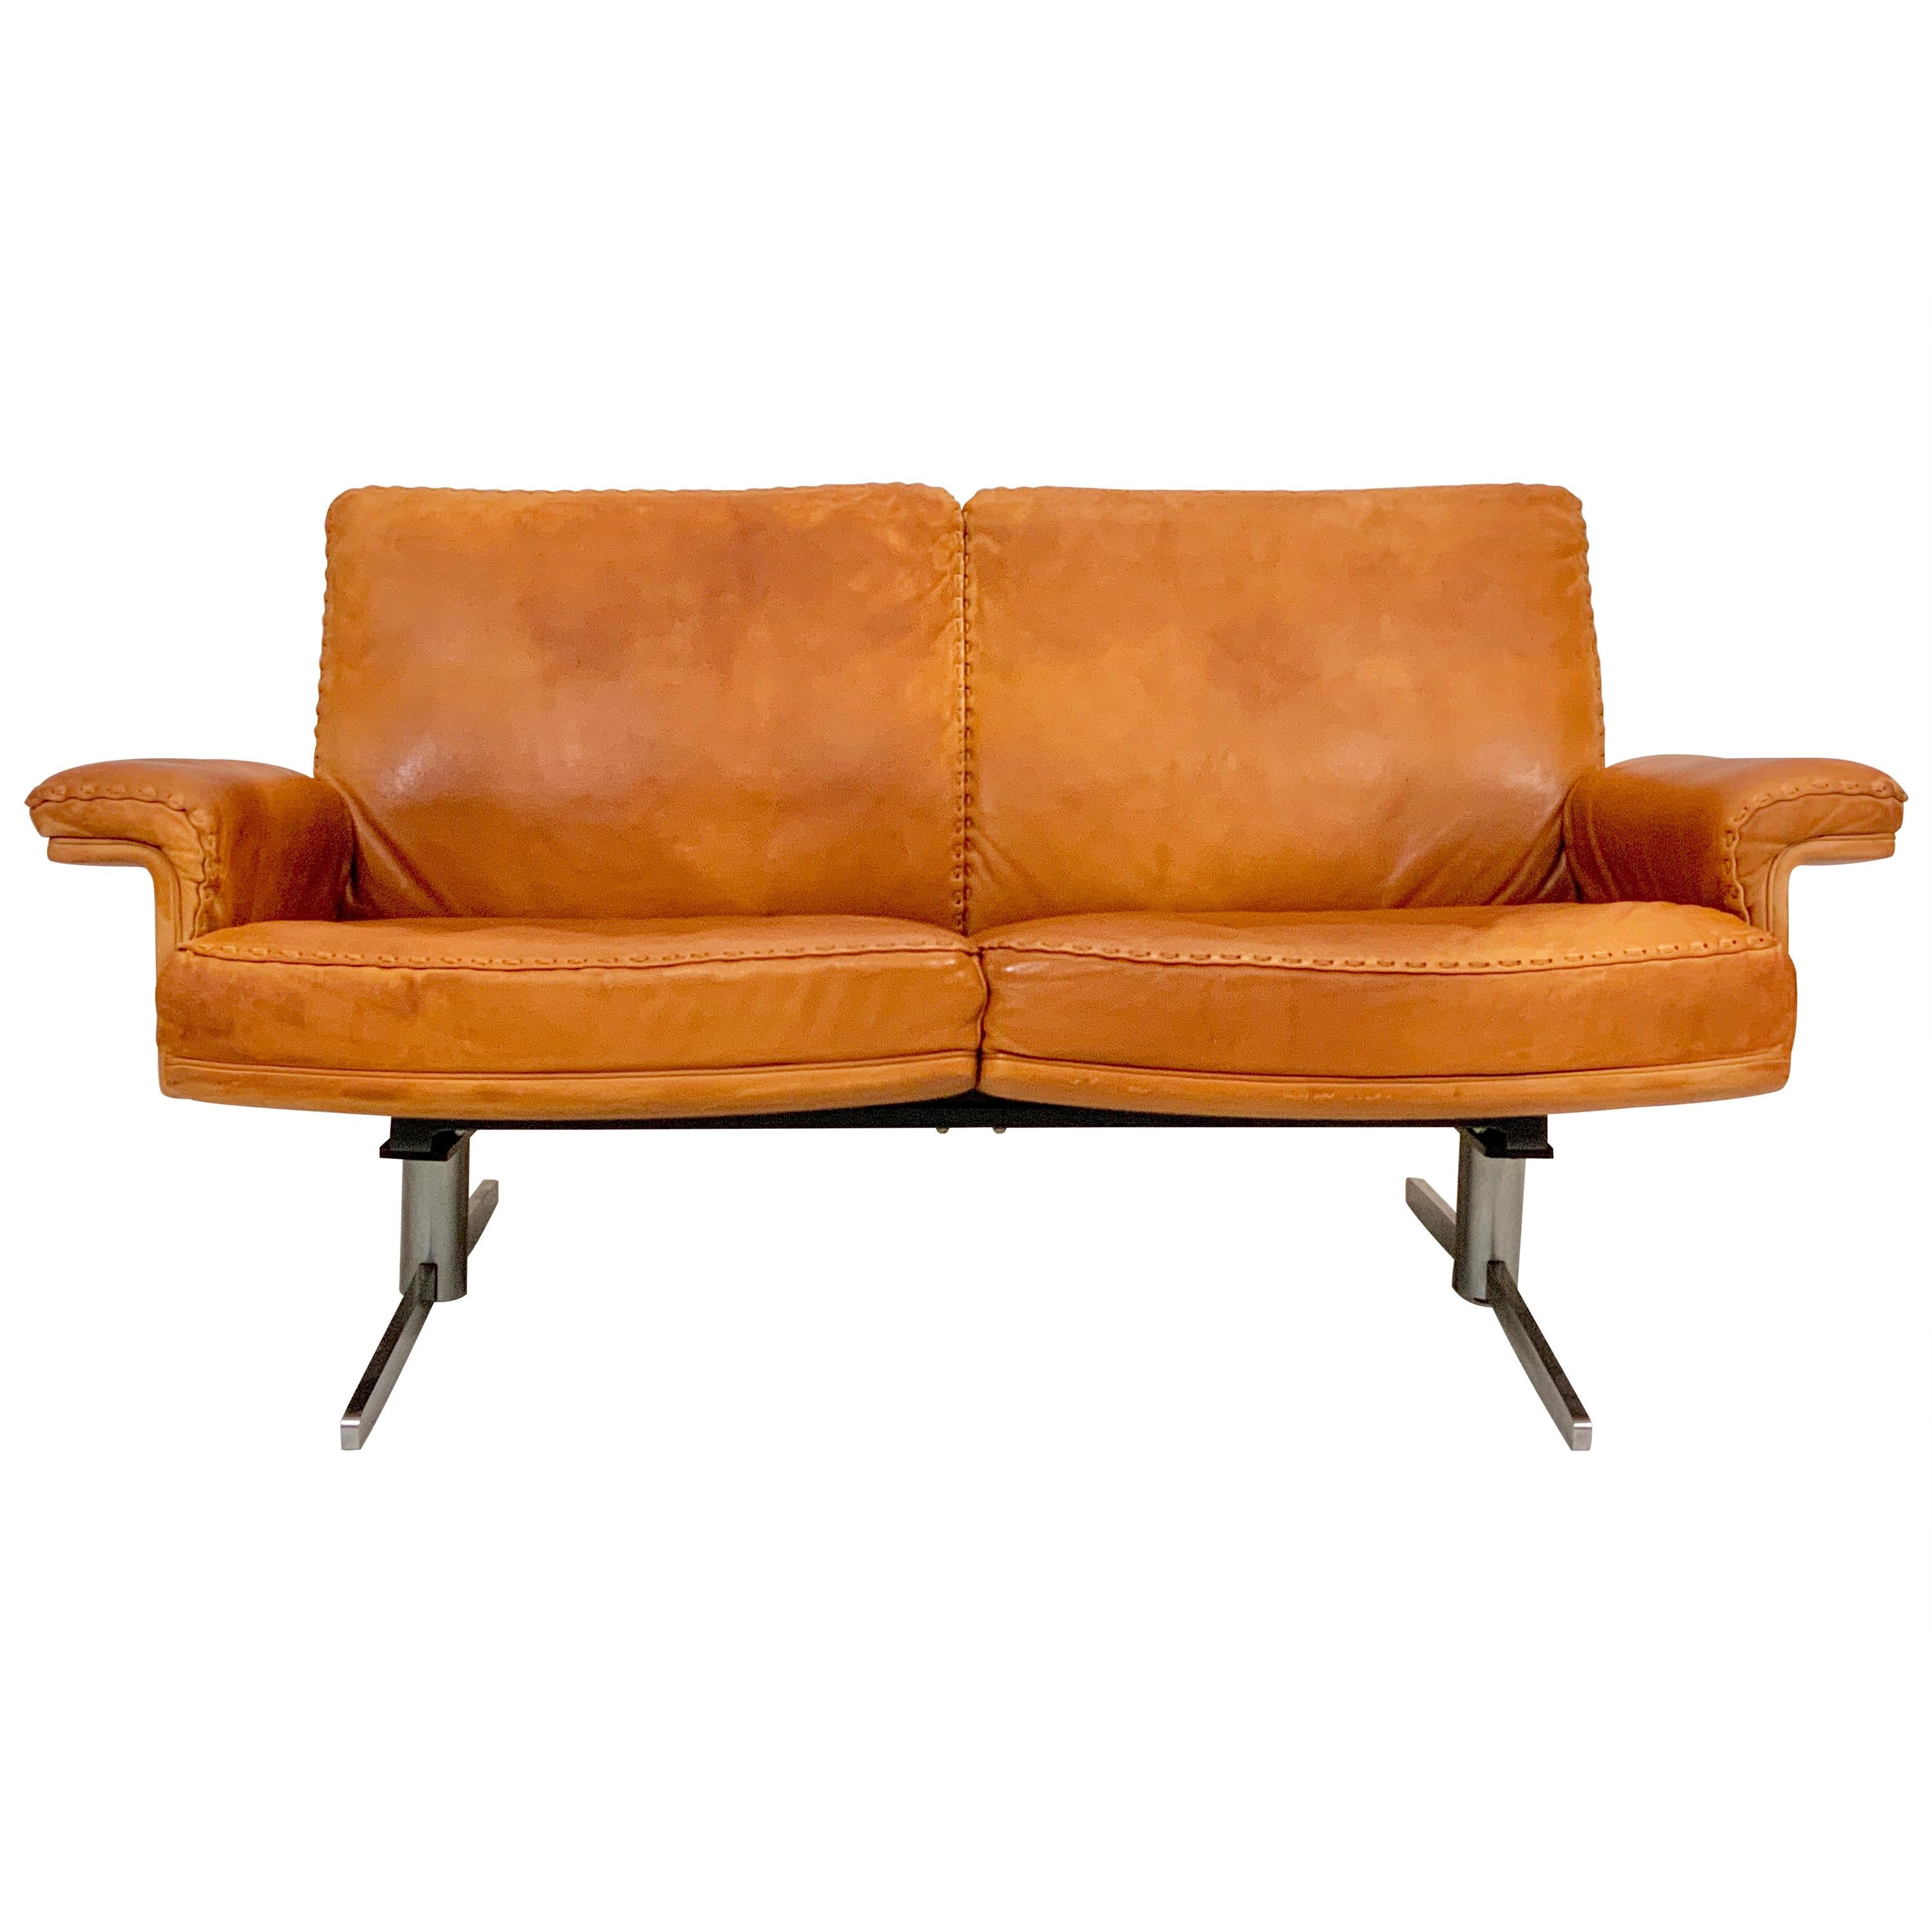 De Sede DS-35 Two-Seat Sofa Loveseat in Cognac Brown Leather, Switzerland, 1960s